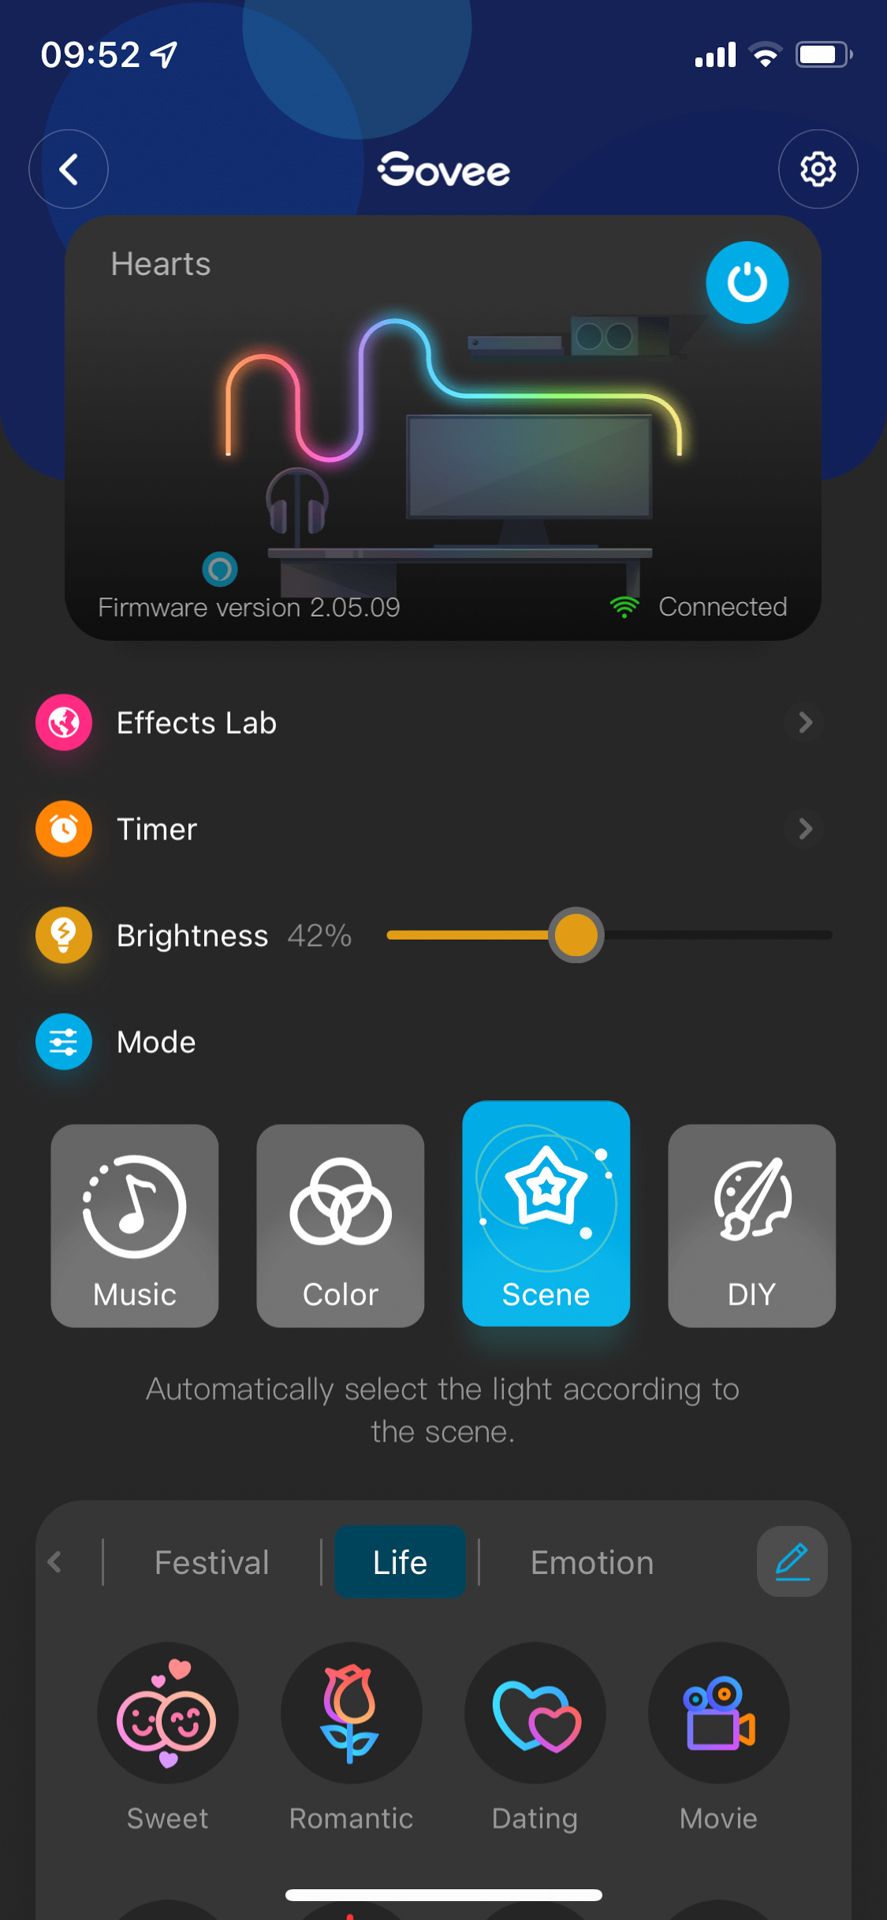 govee app - screenshots - main interface